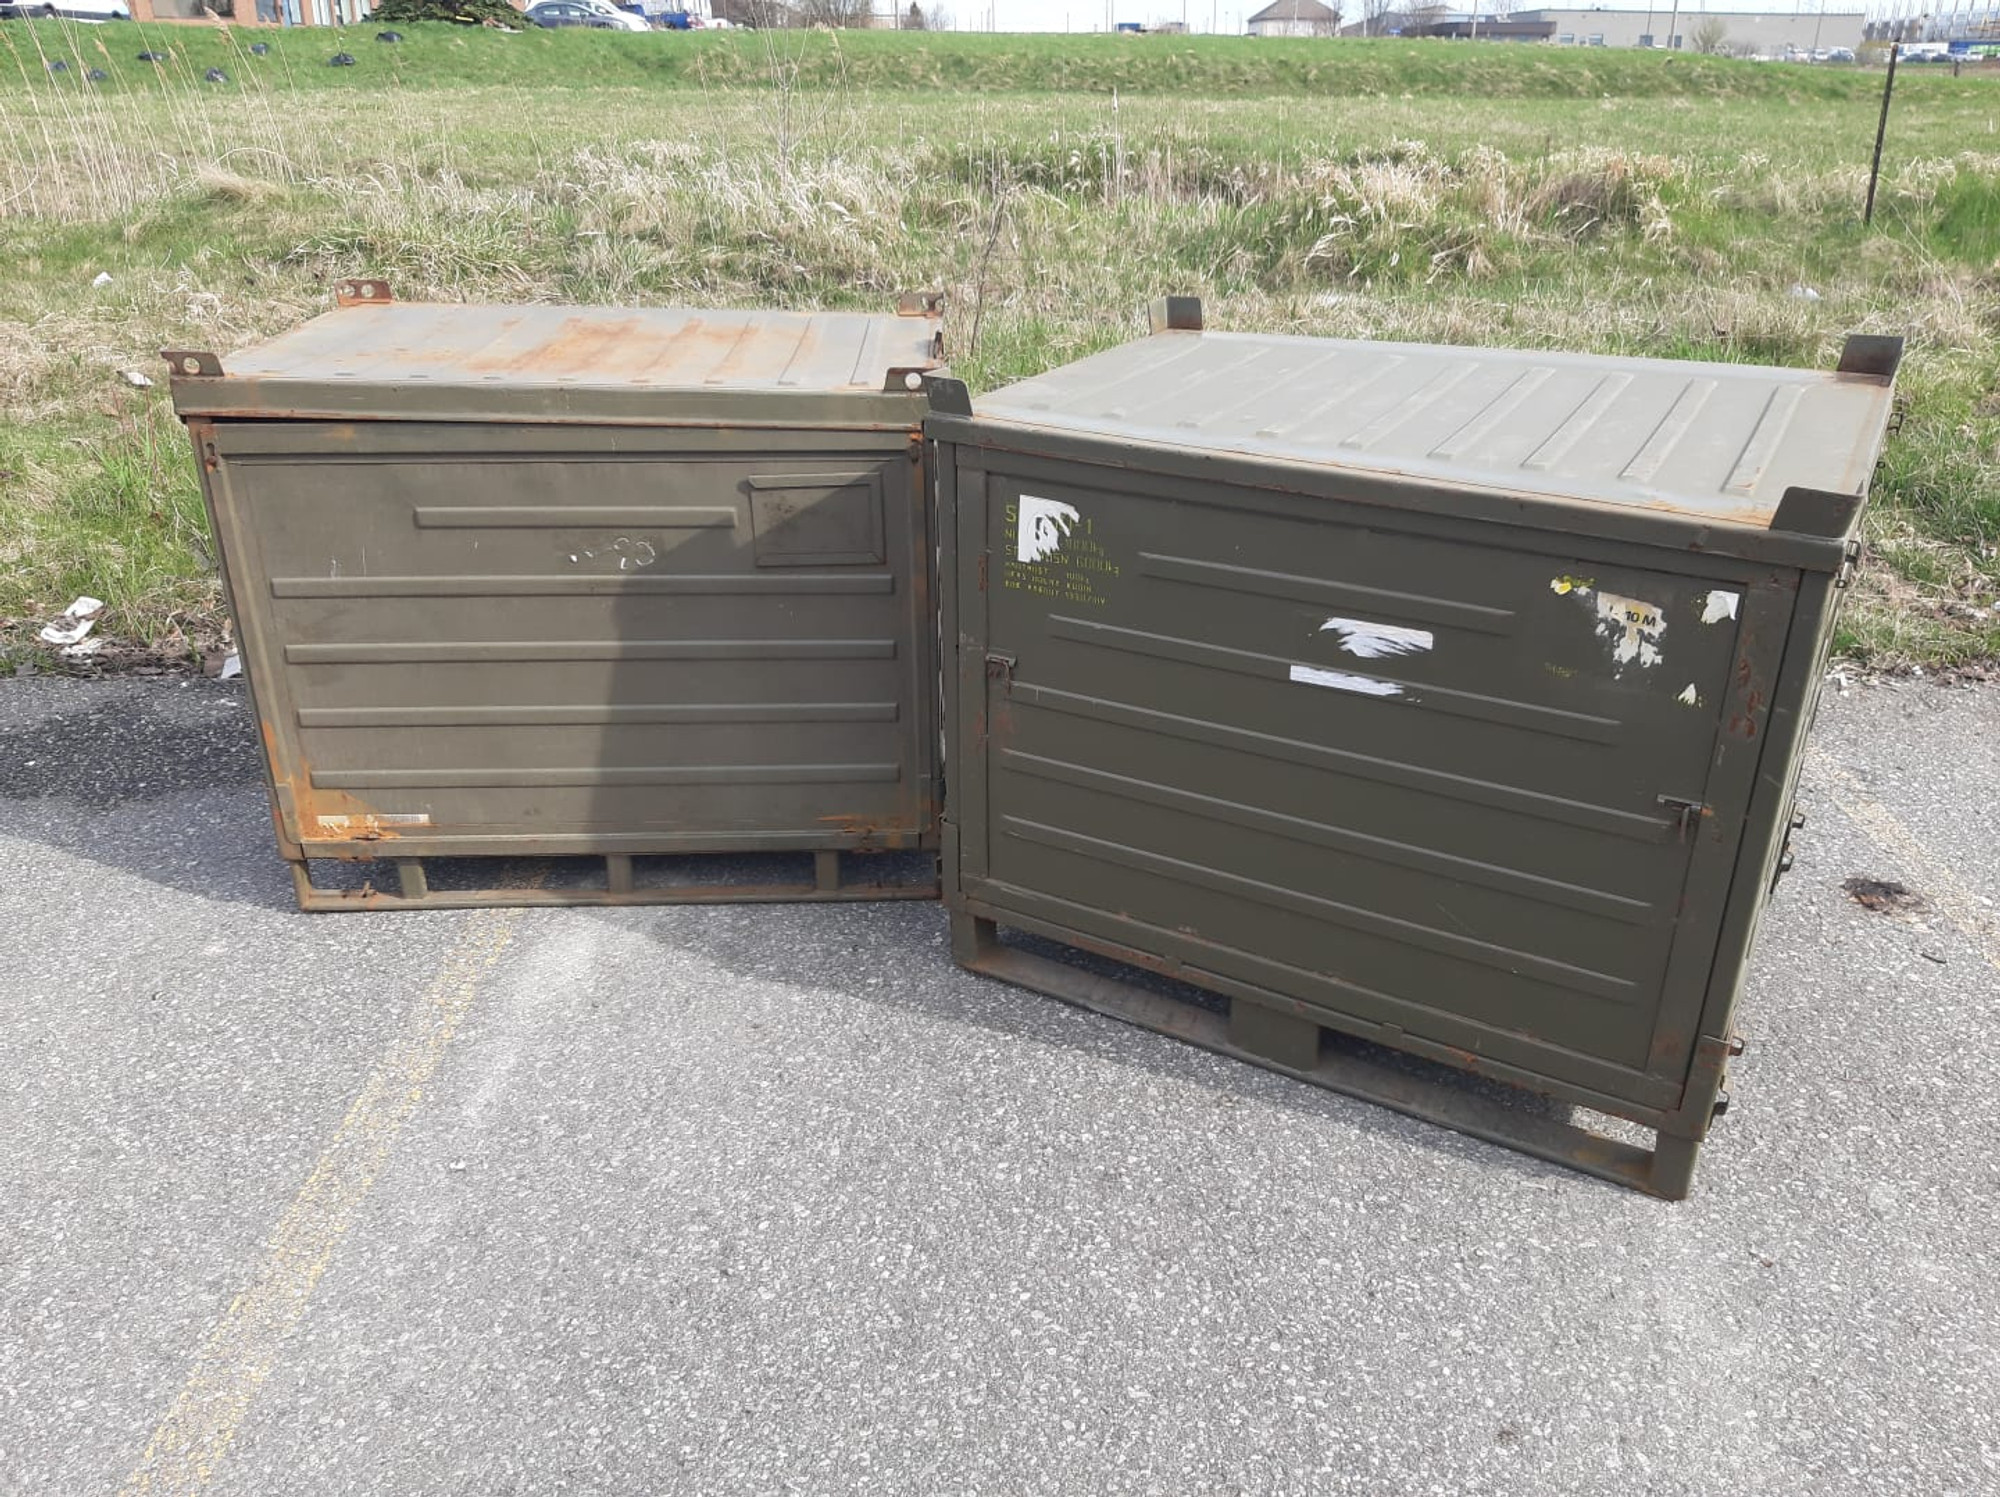 Czech Military Metal Transport Crates